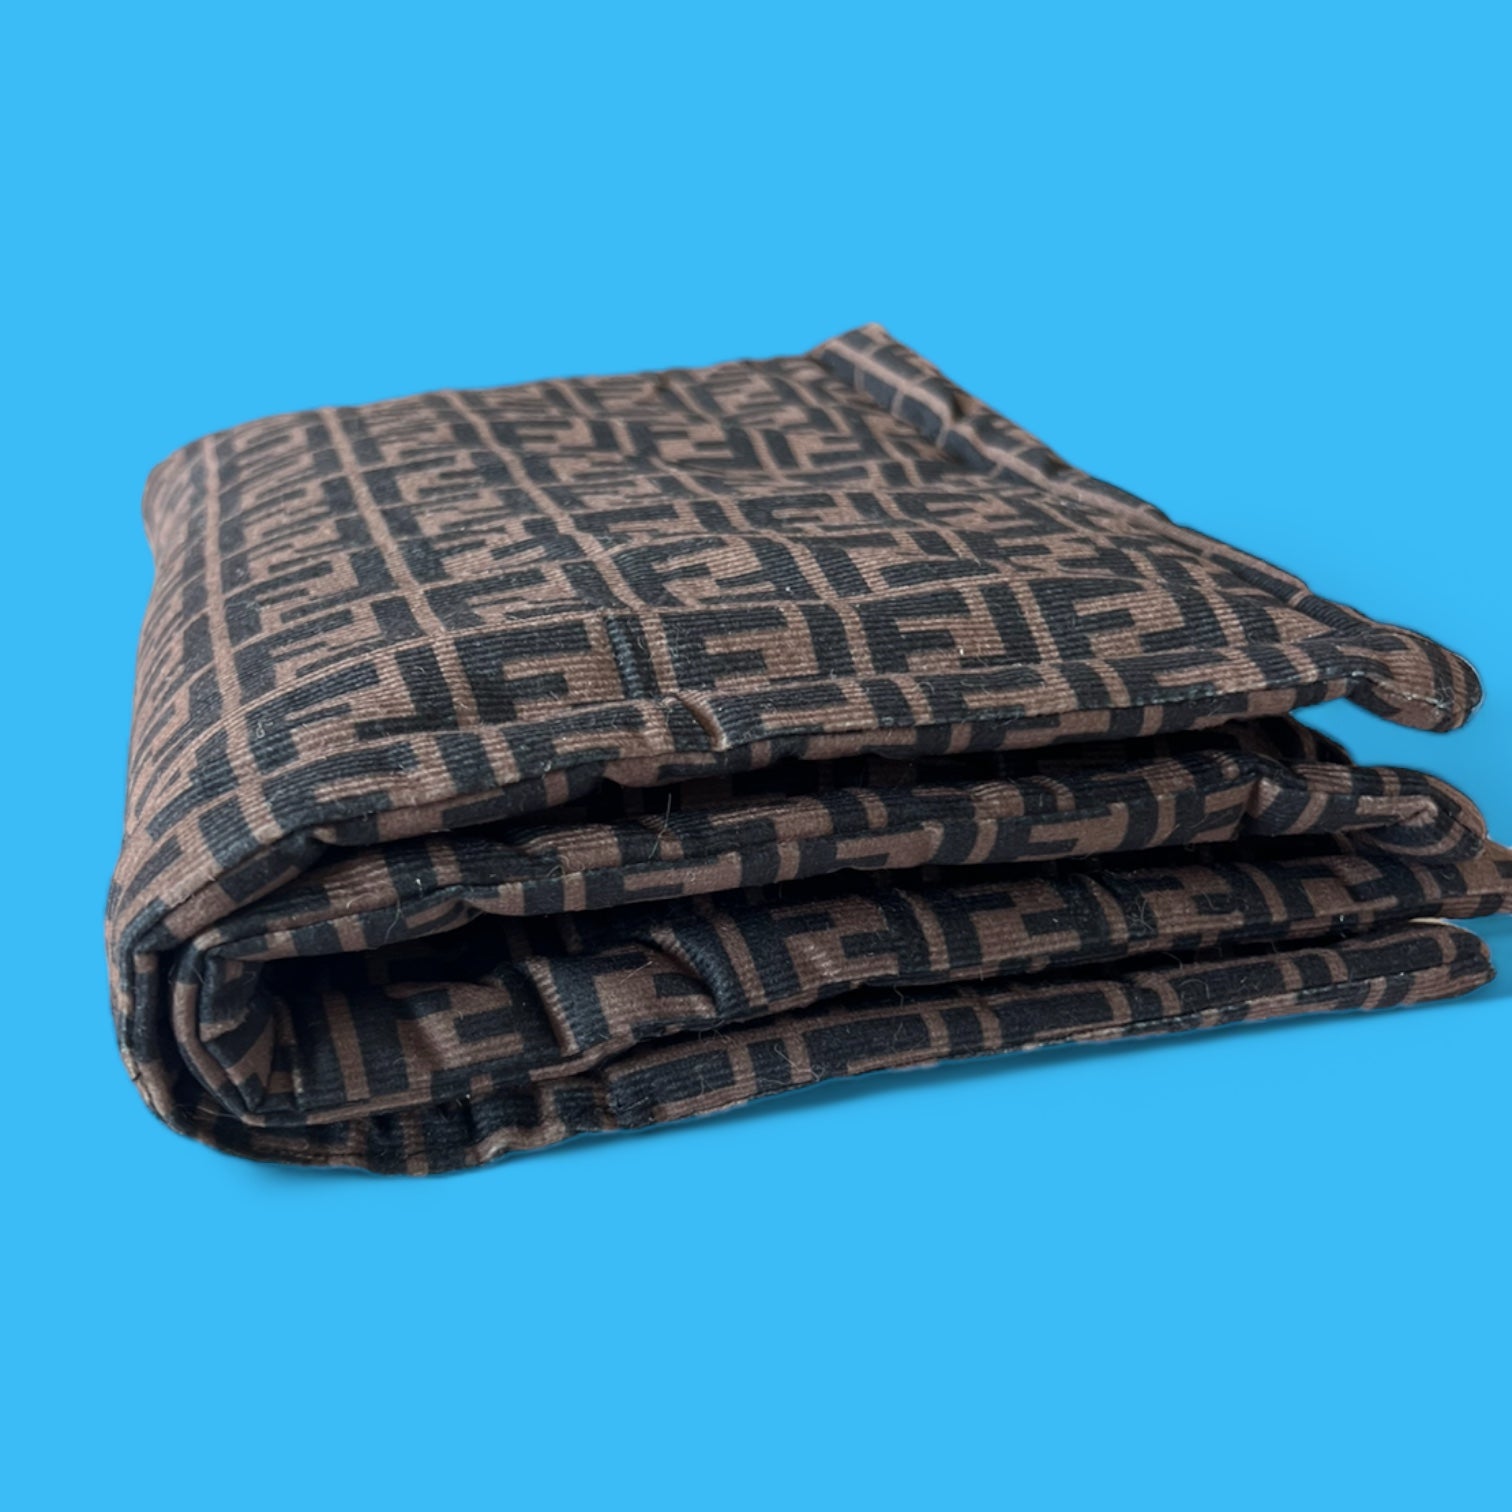 Furdi Furry Blanket Mat bearsupreme